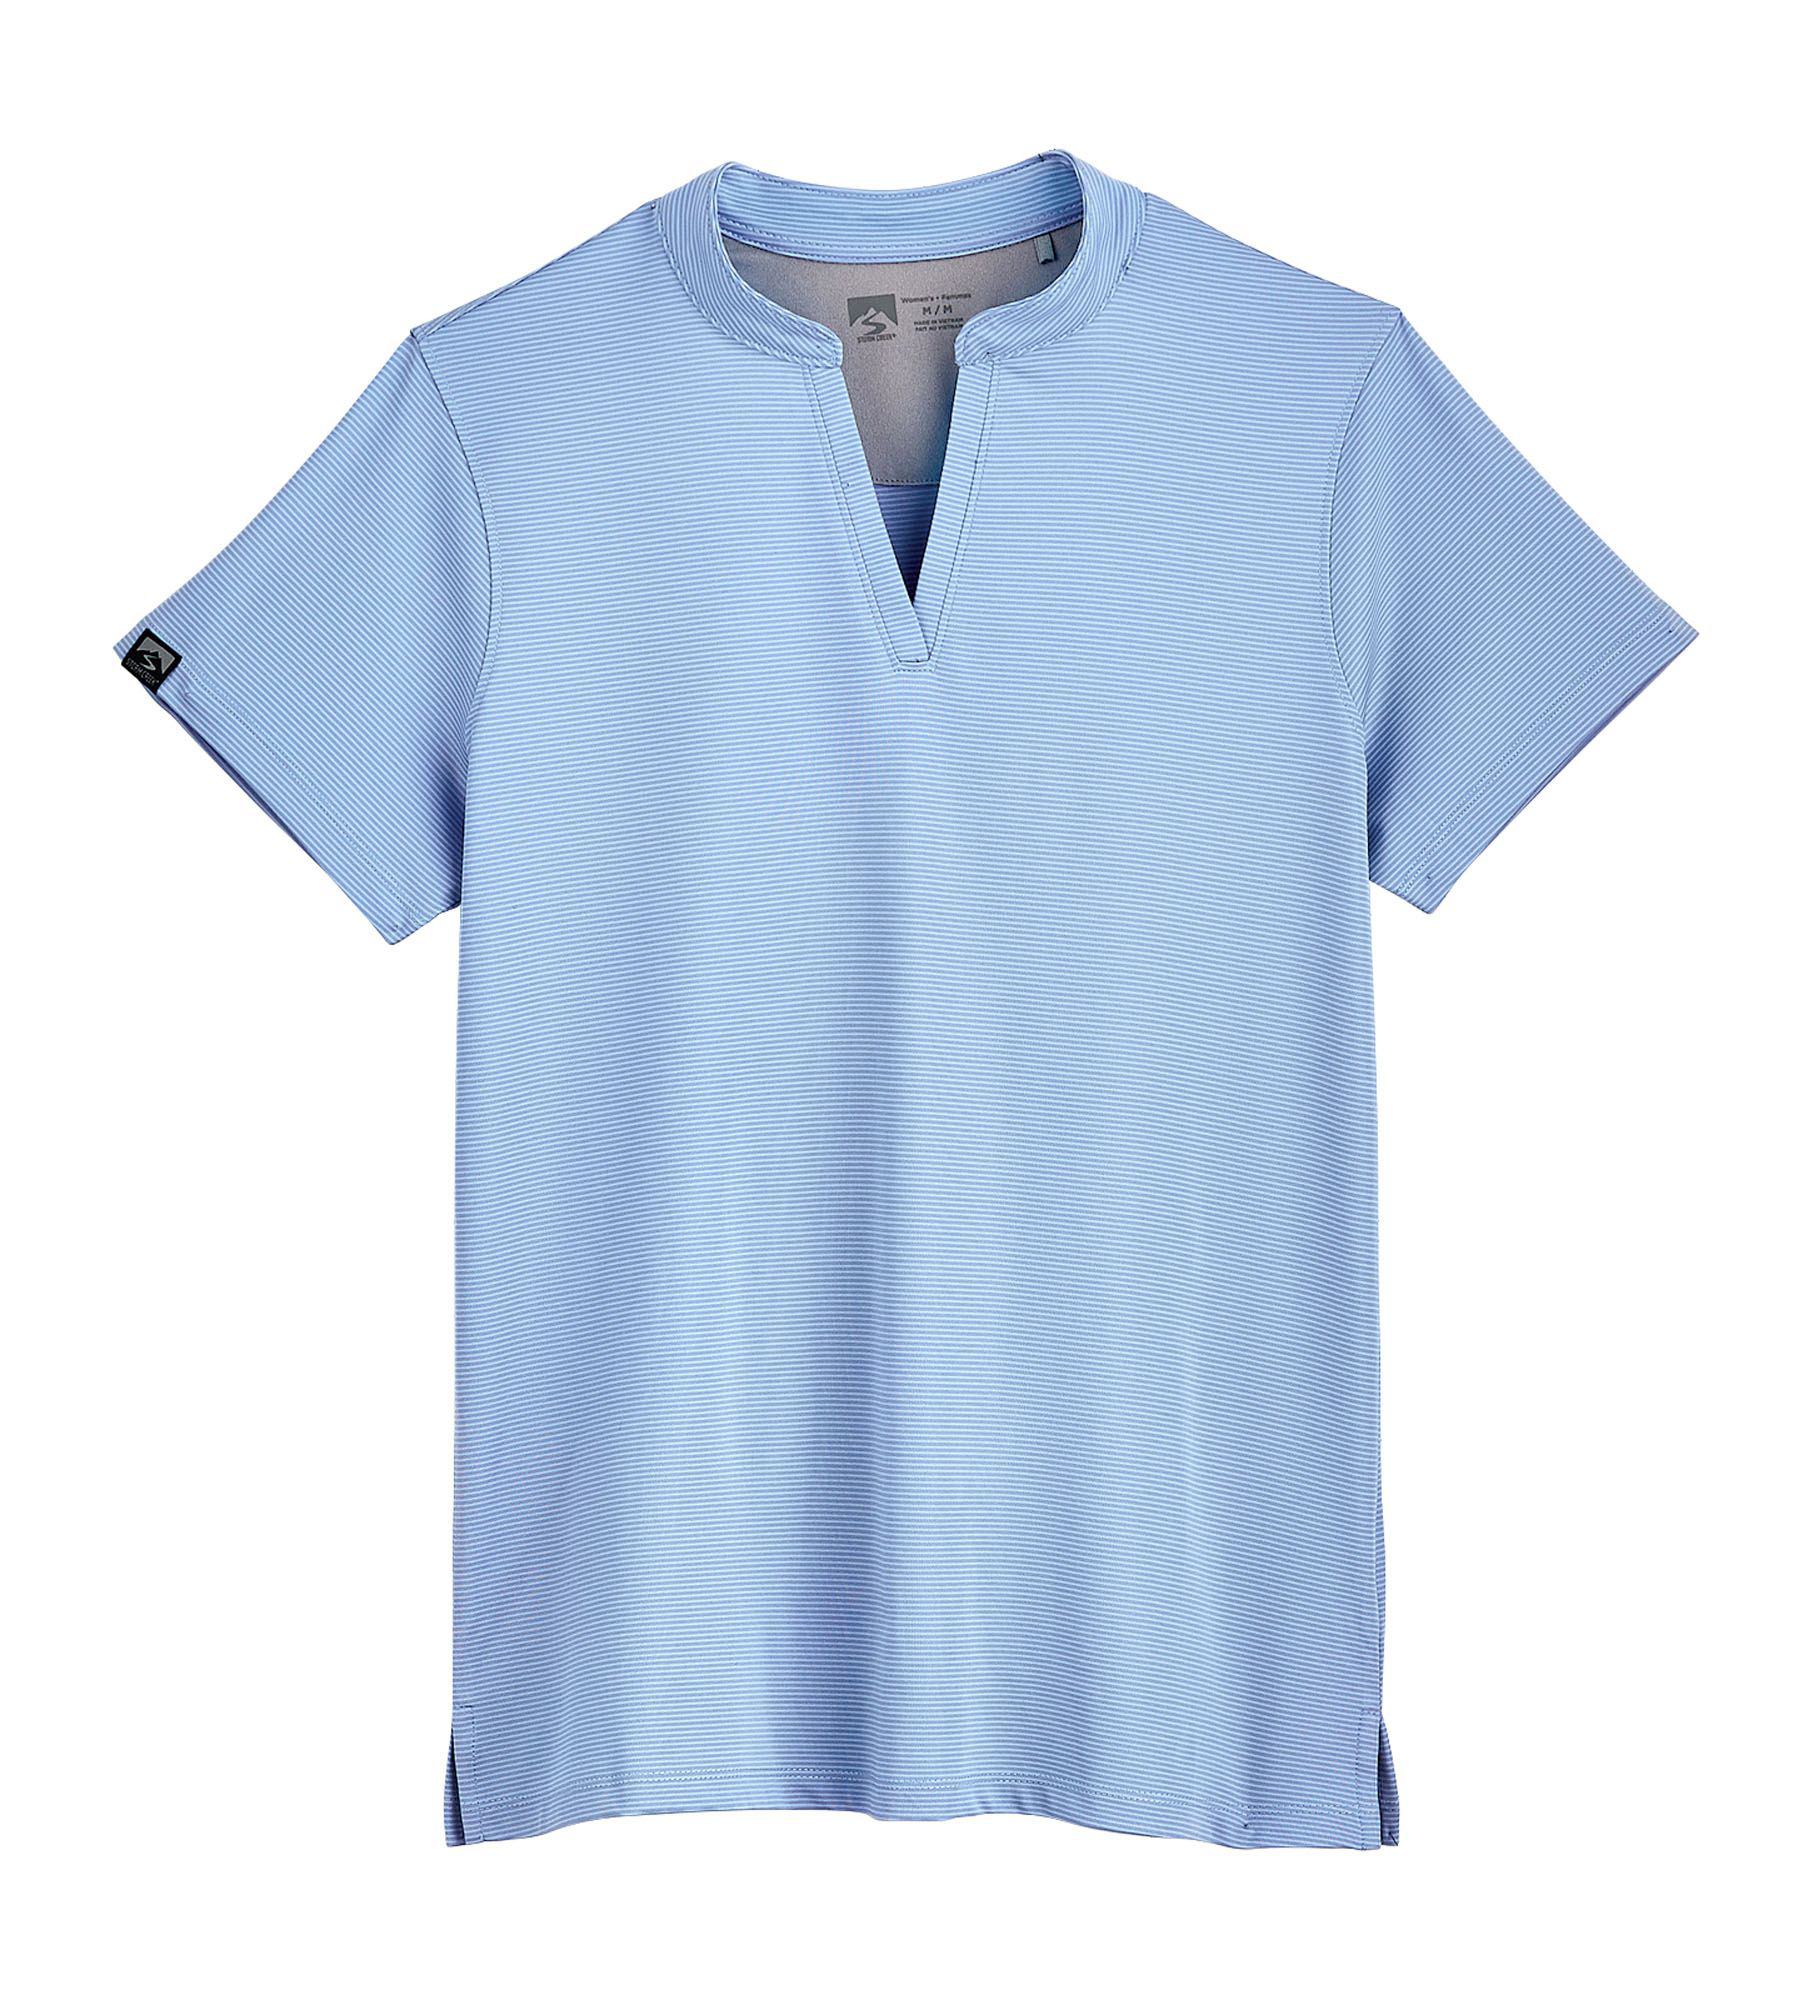 Storm Creek Optimist Short-Sleeve Polo Shirt for Ladies - Peri Blue - M